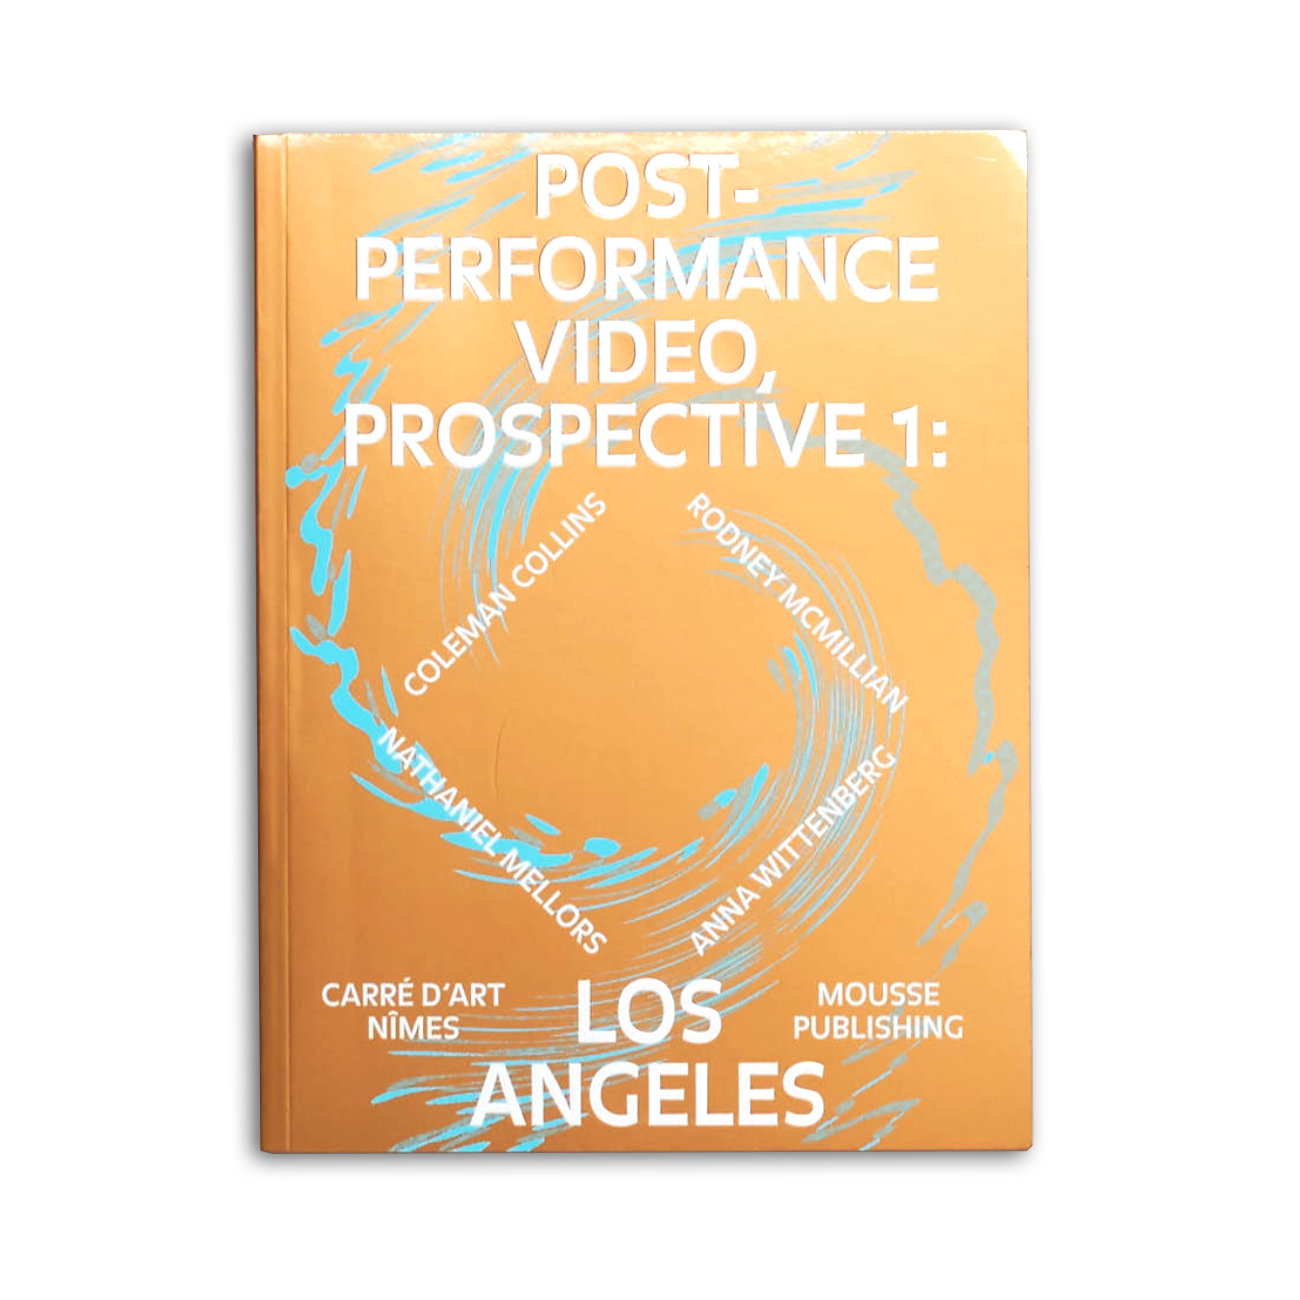 Post-Performance Video: Prospective 1: Los Angeles